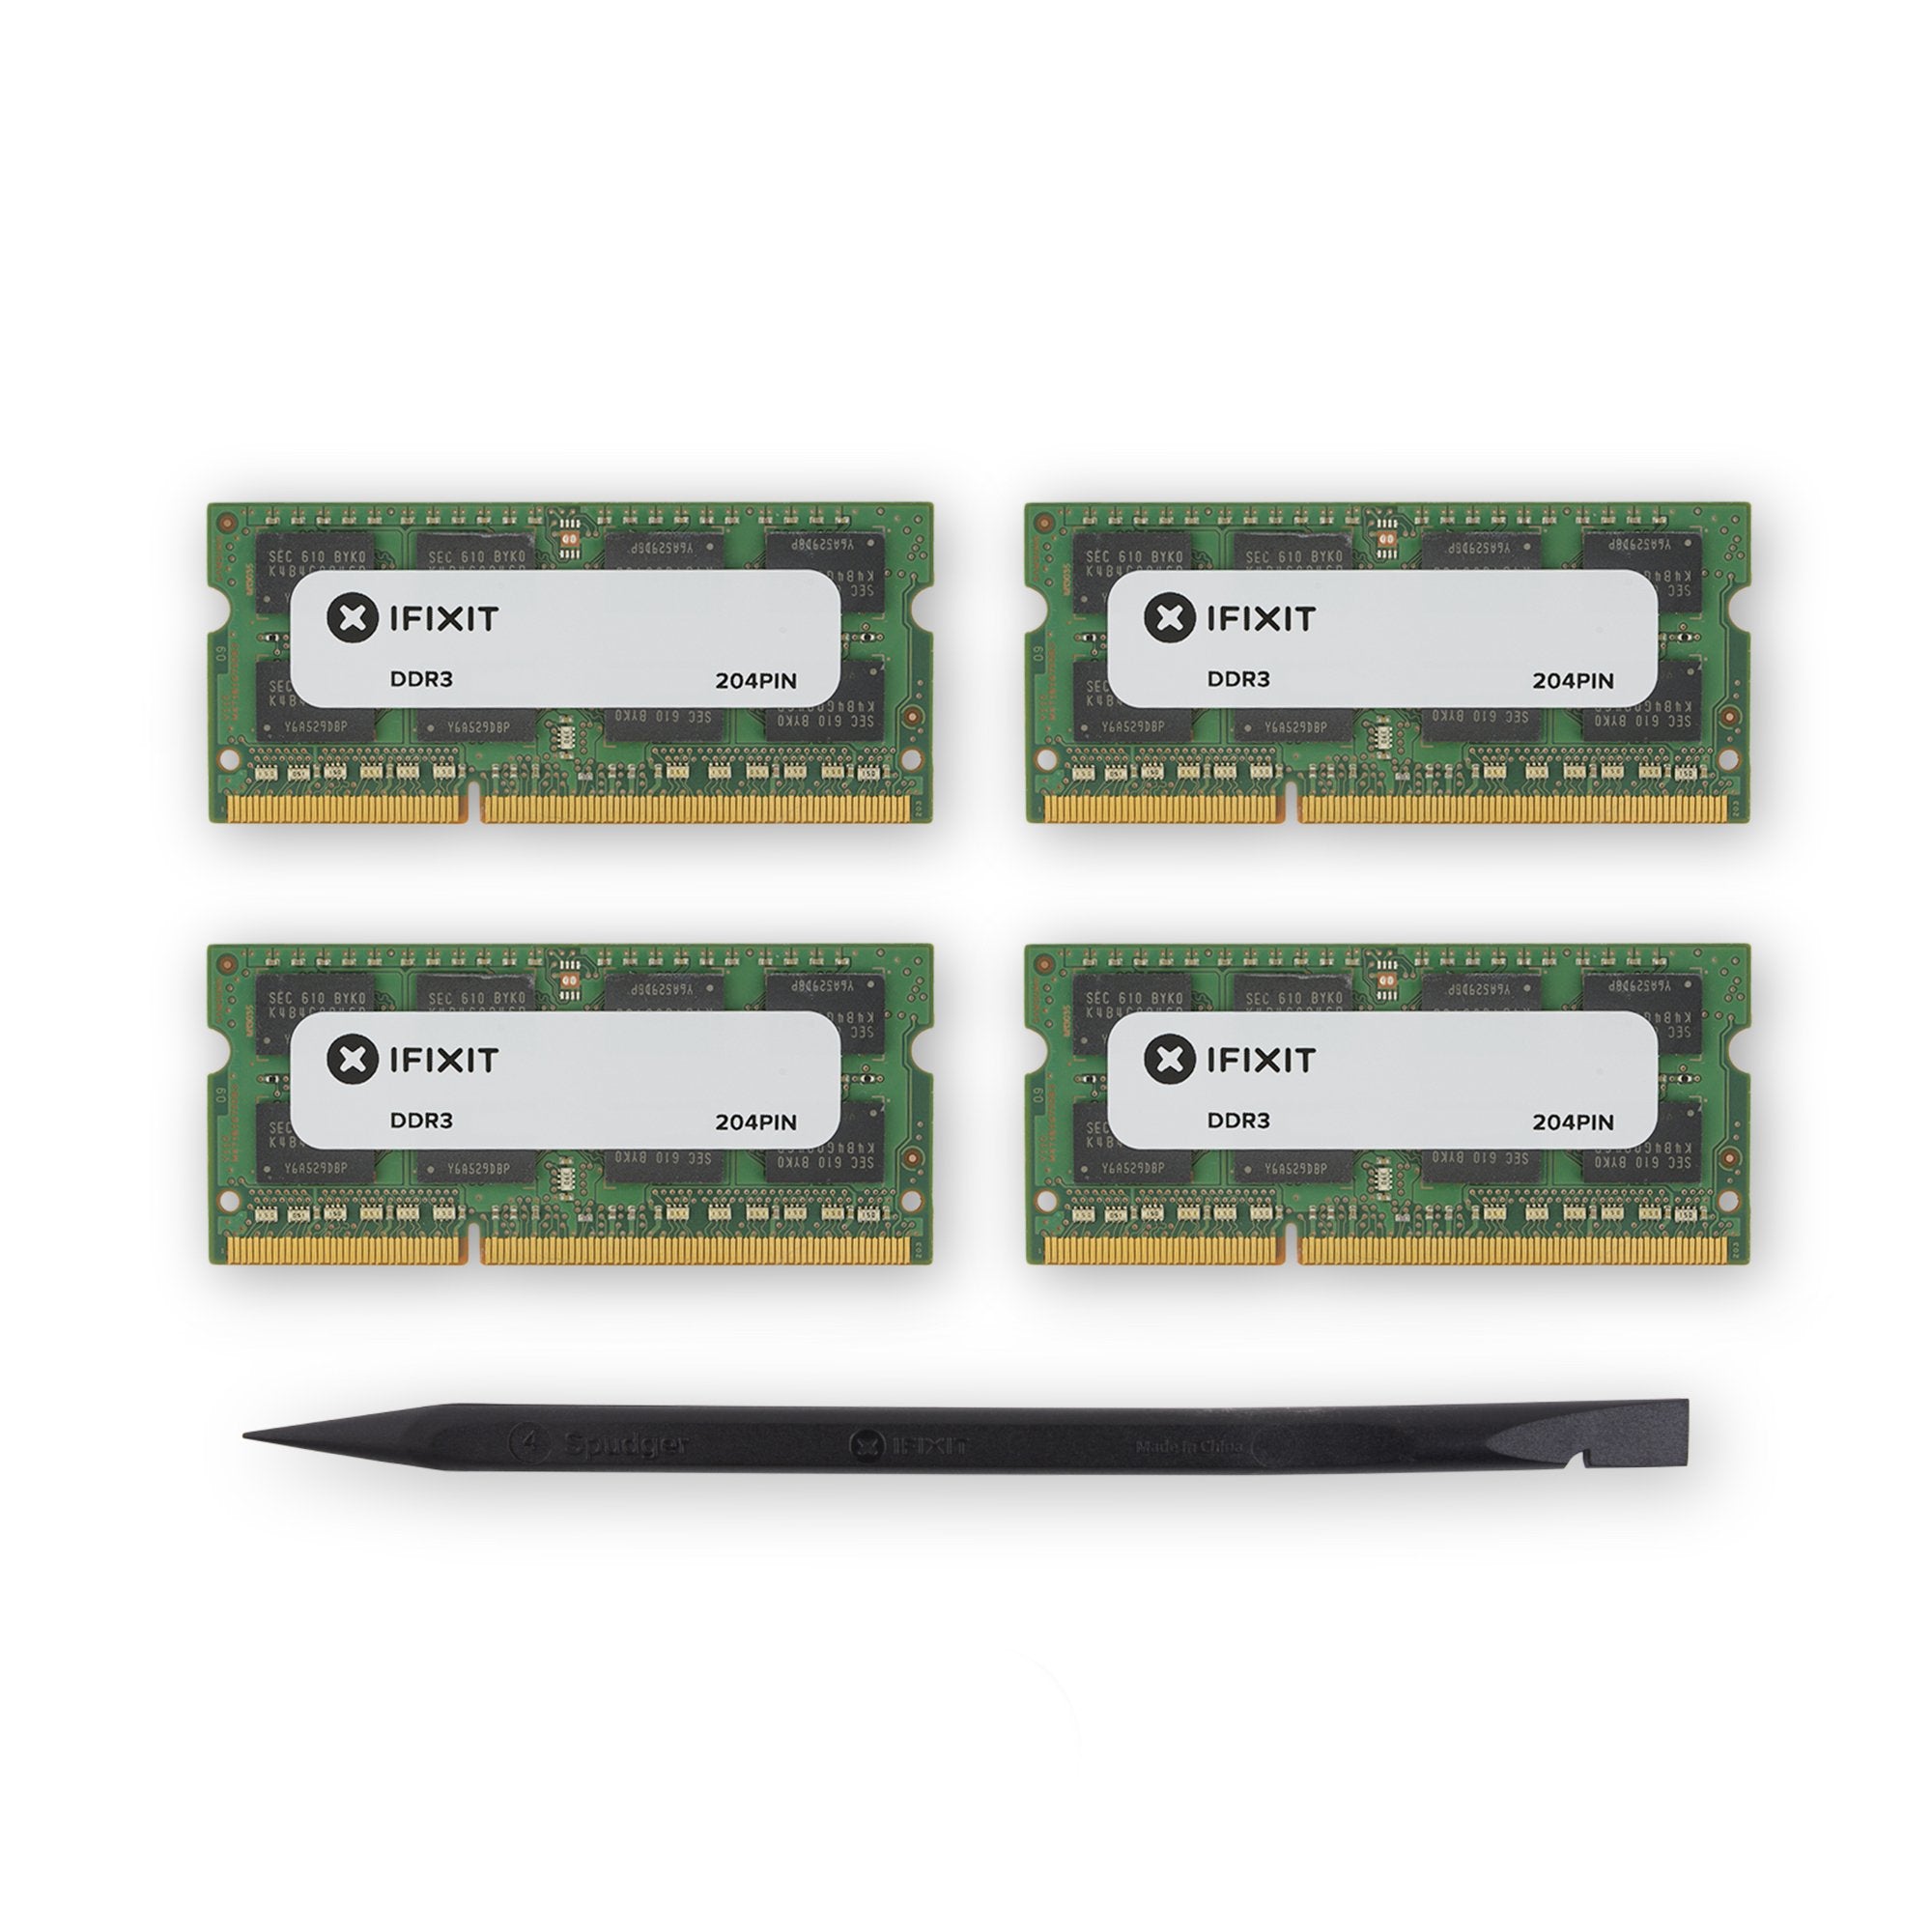 iMac Intel 27" EMC 2834 (Late 2015, 5K Display) Memory Maxxer RAM Upgrade Kit